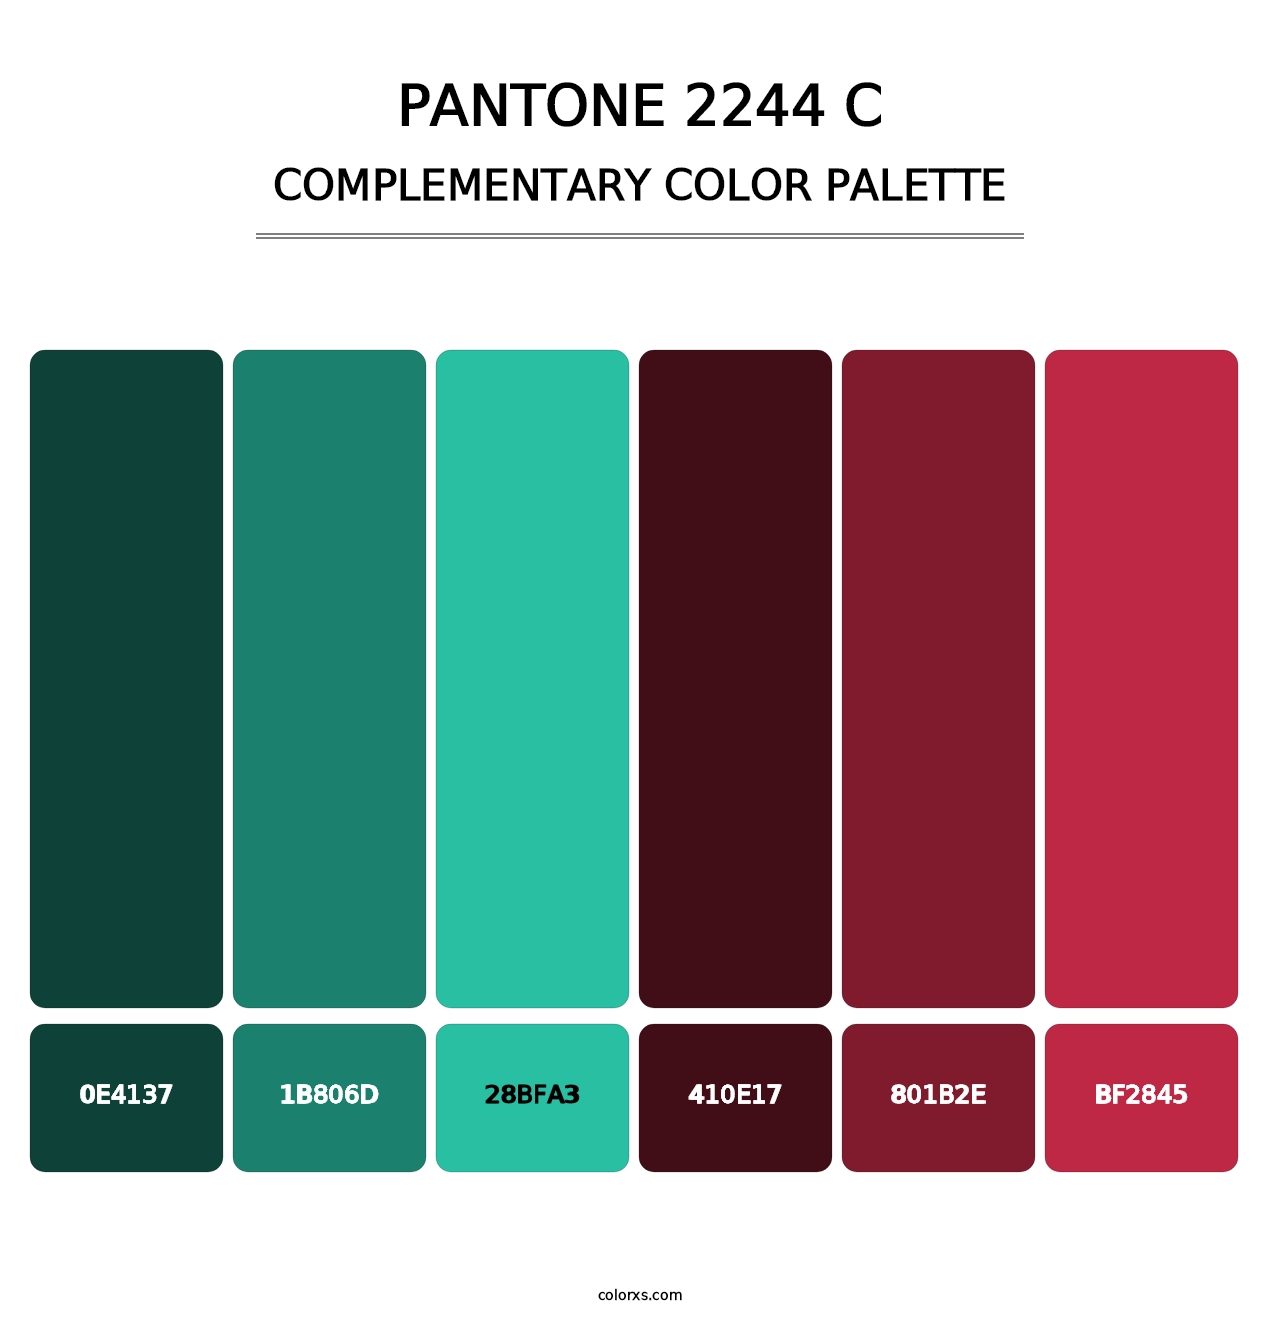 PANTONE 2244 C - Complementary Color Palette